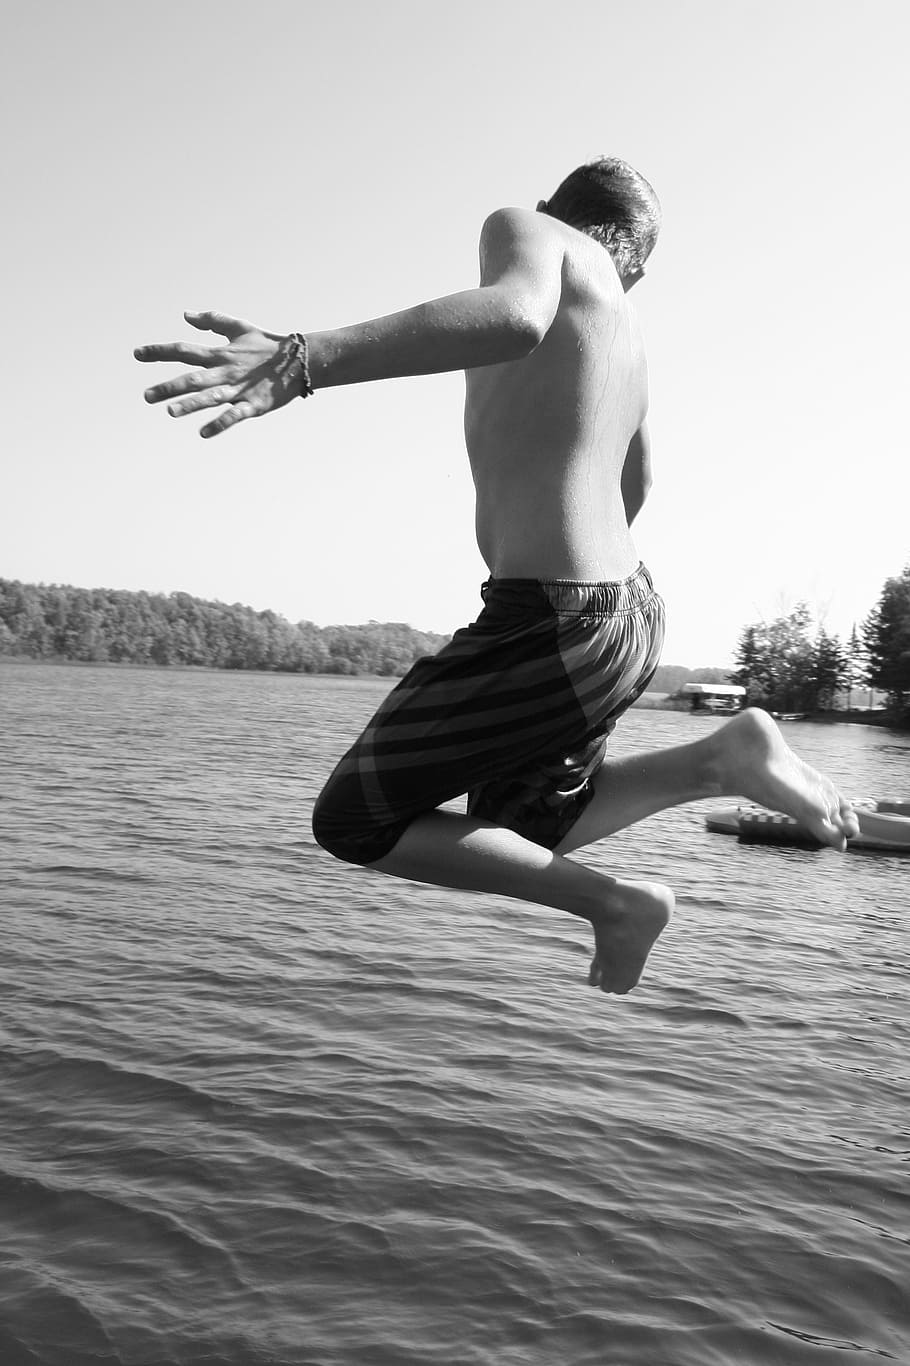 foto grayscale, lompatan anak laki-laki, air, anak laki-laki, lompatan, anak, remaja, kesenangan, danau, melompat